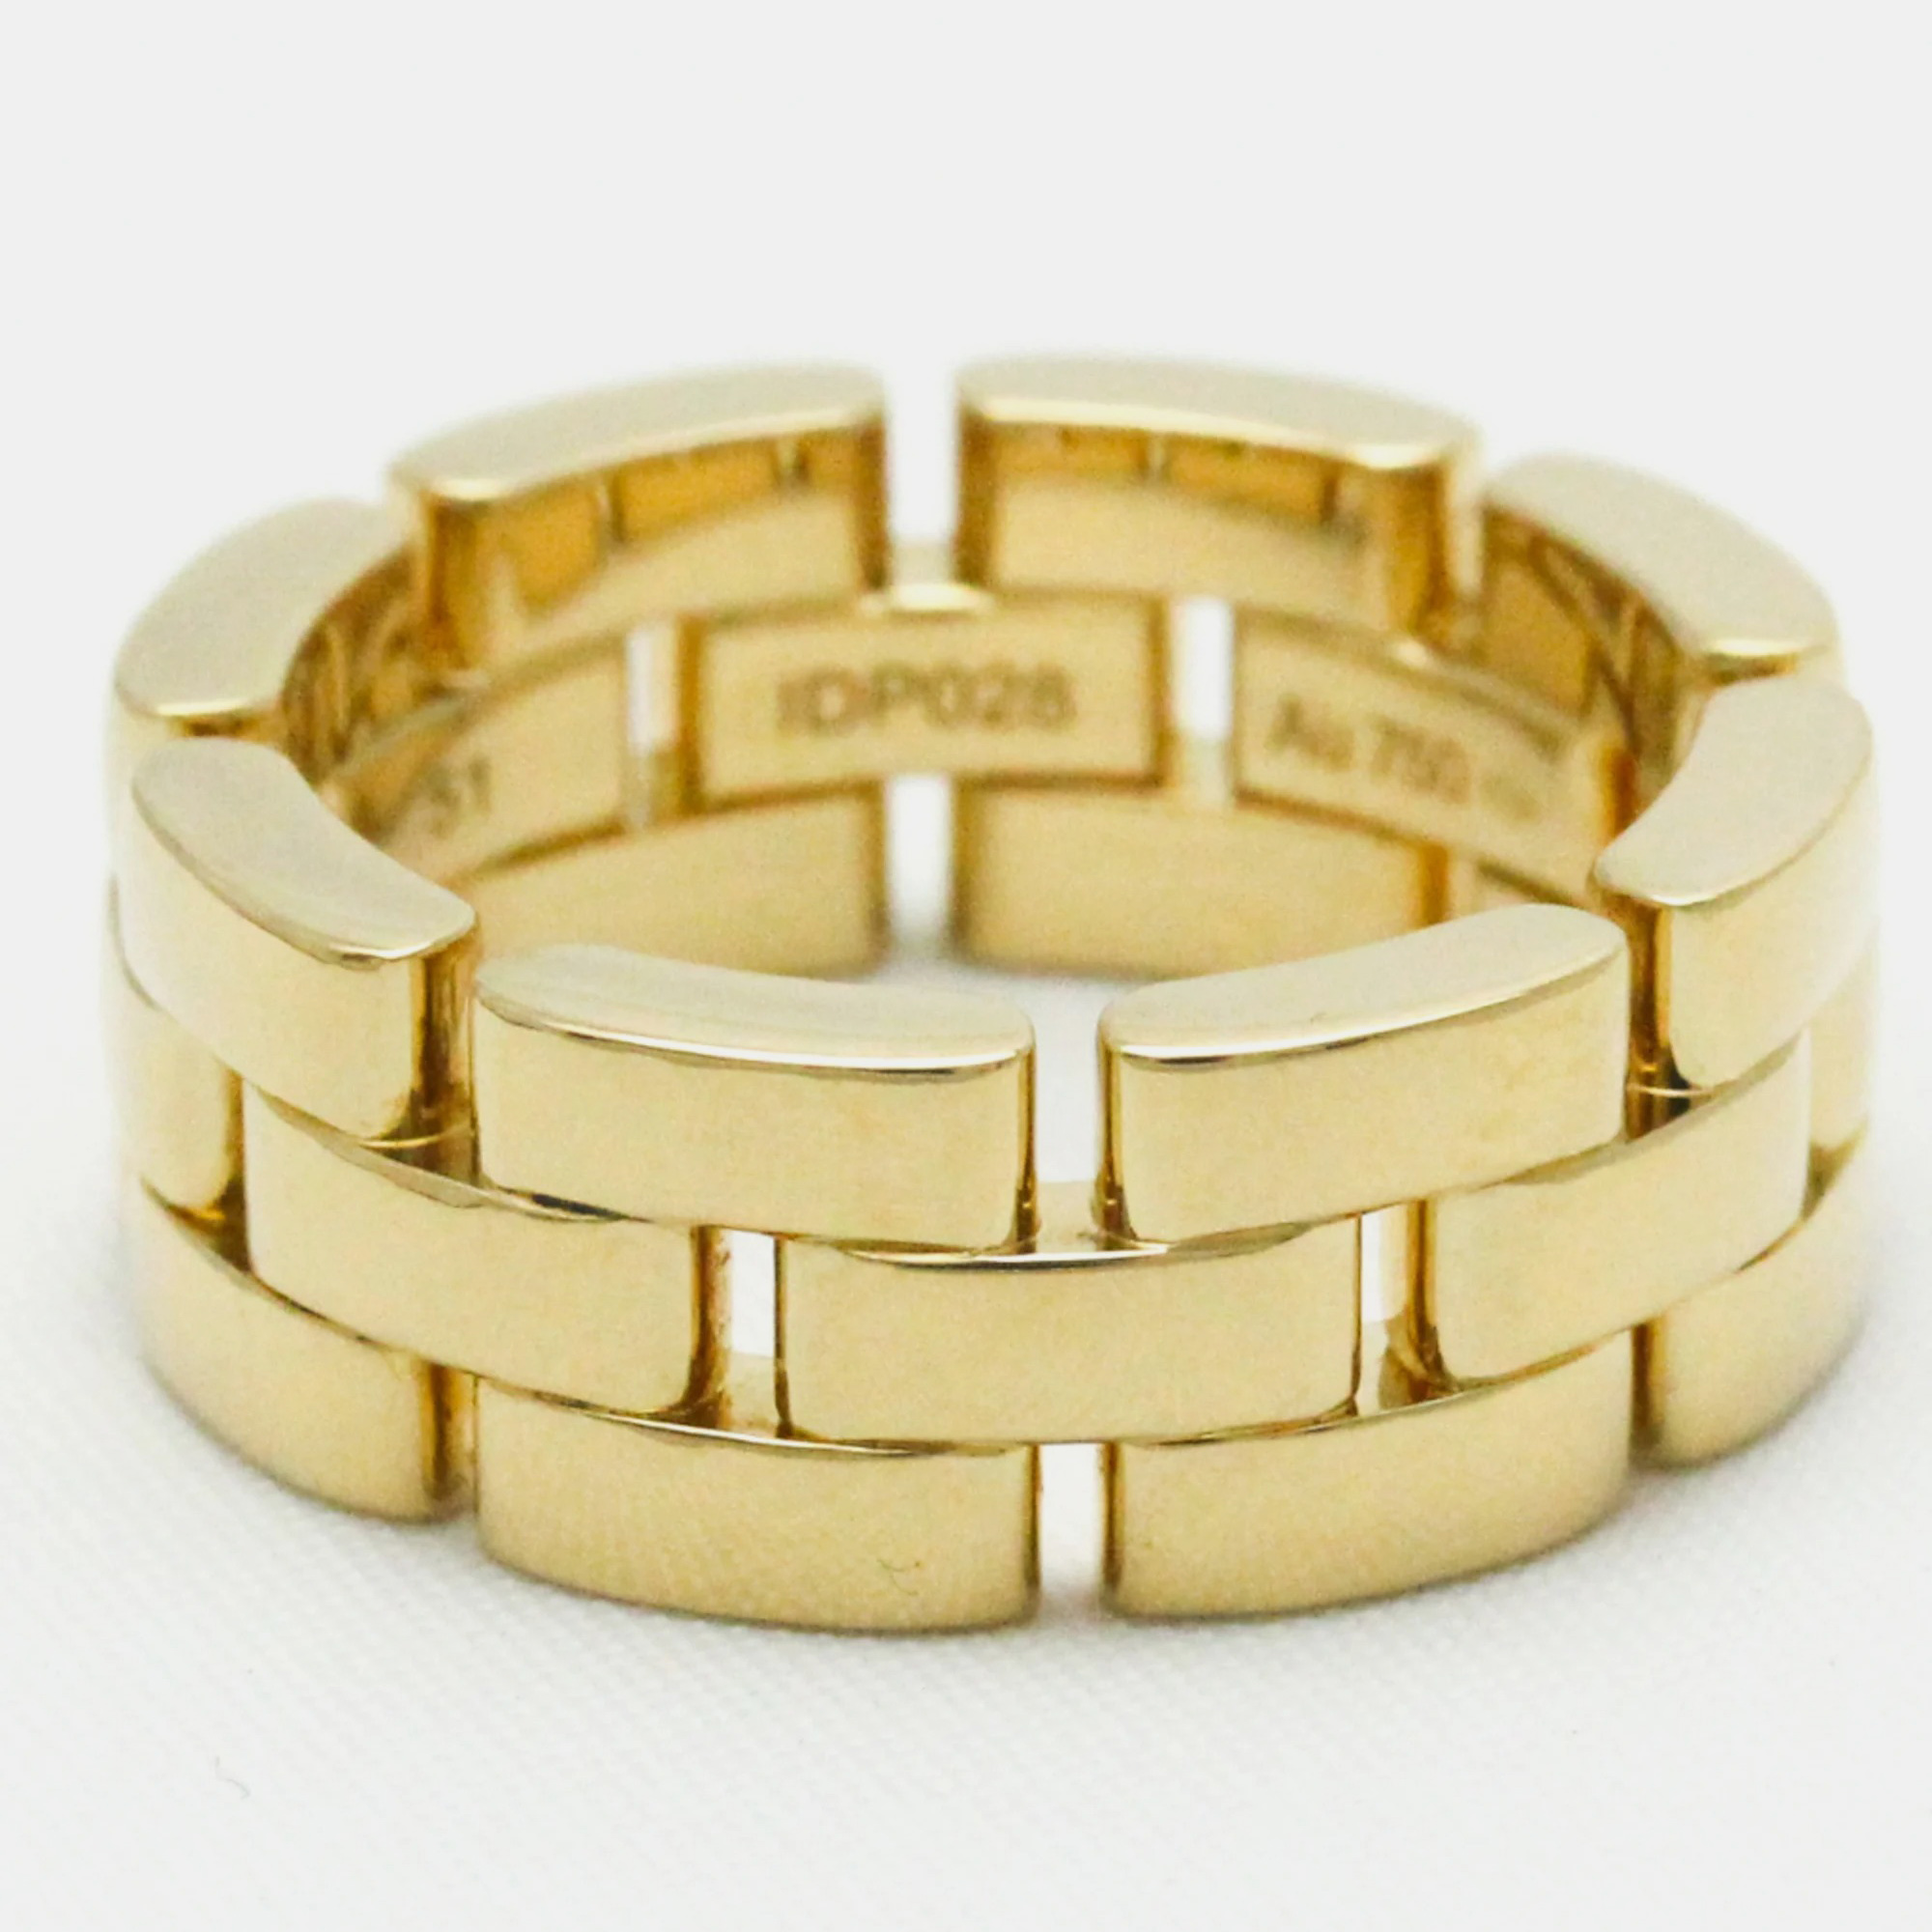 Cartier Maillon Panthere 18K Yellow Gold Ring EU 51